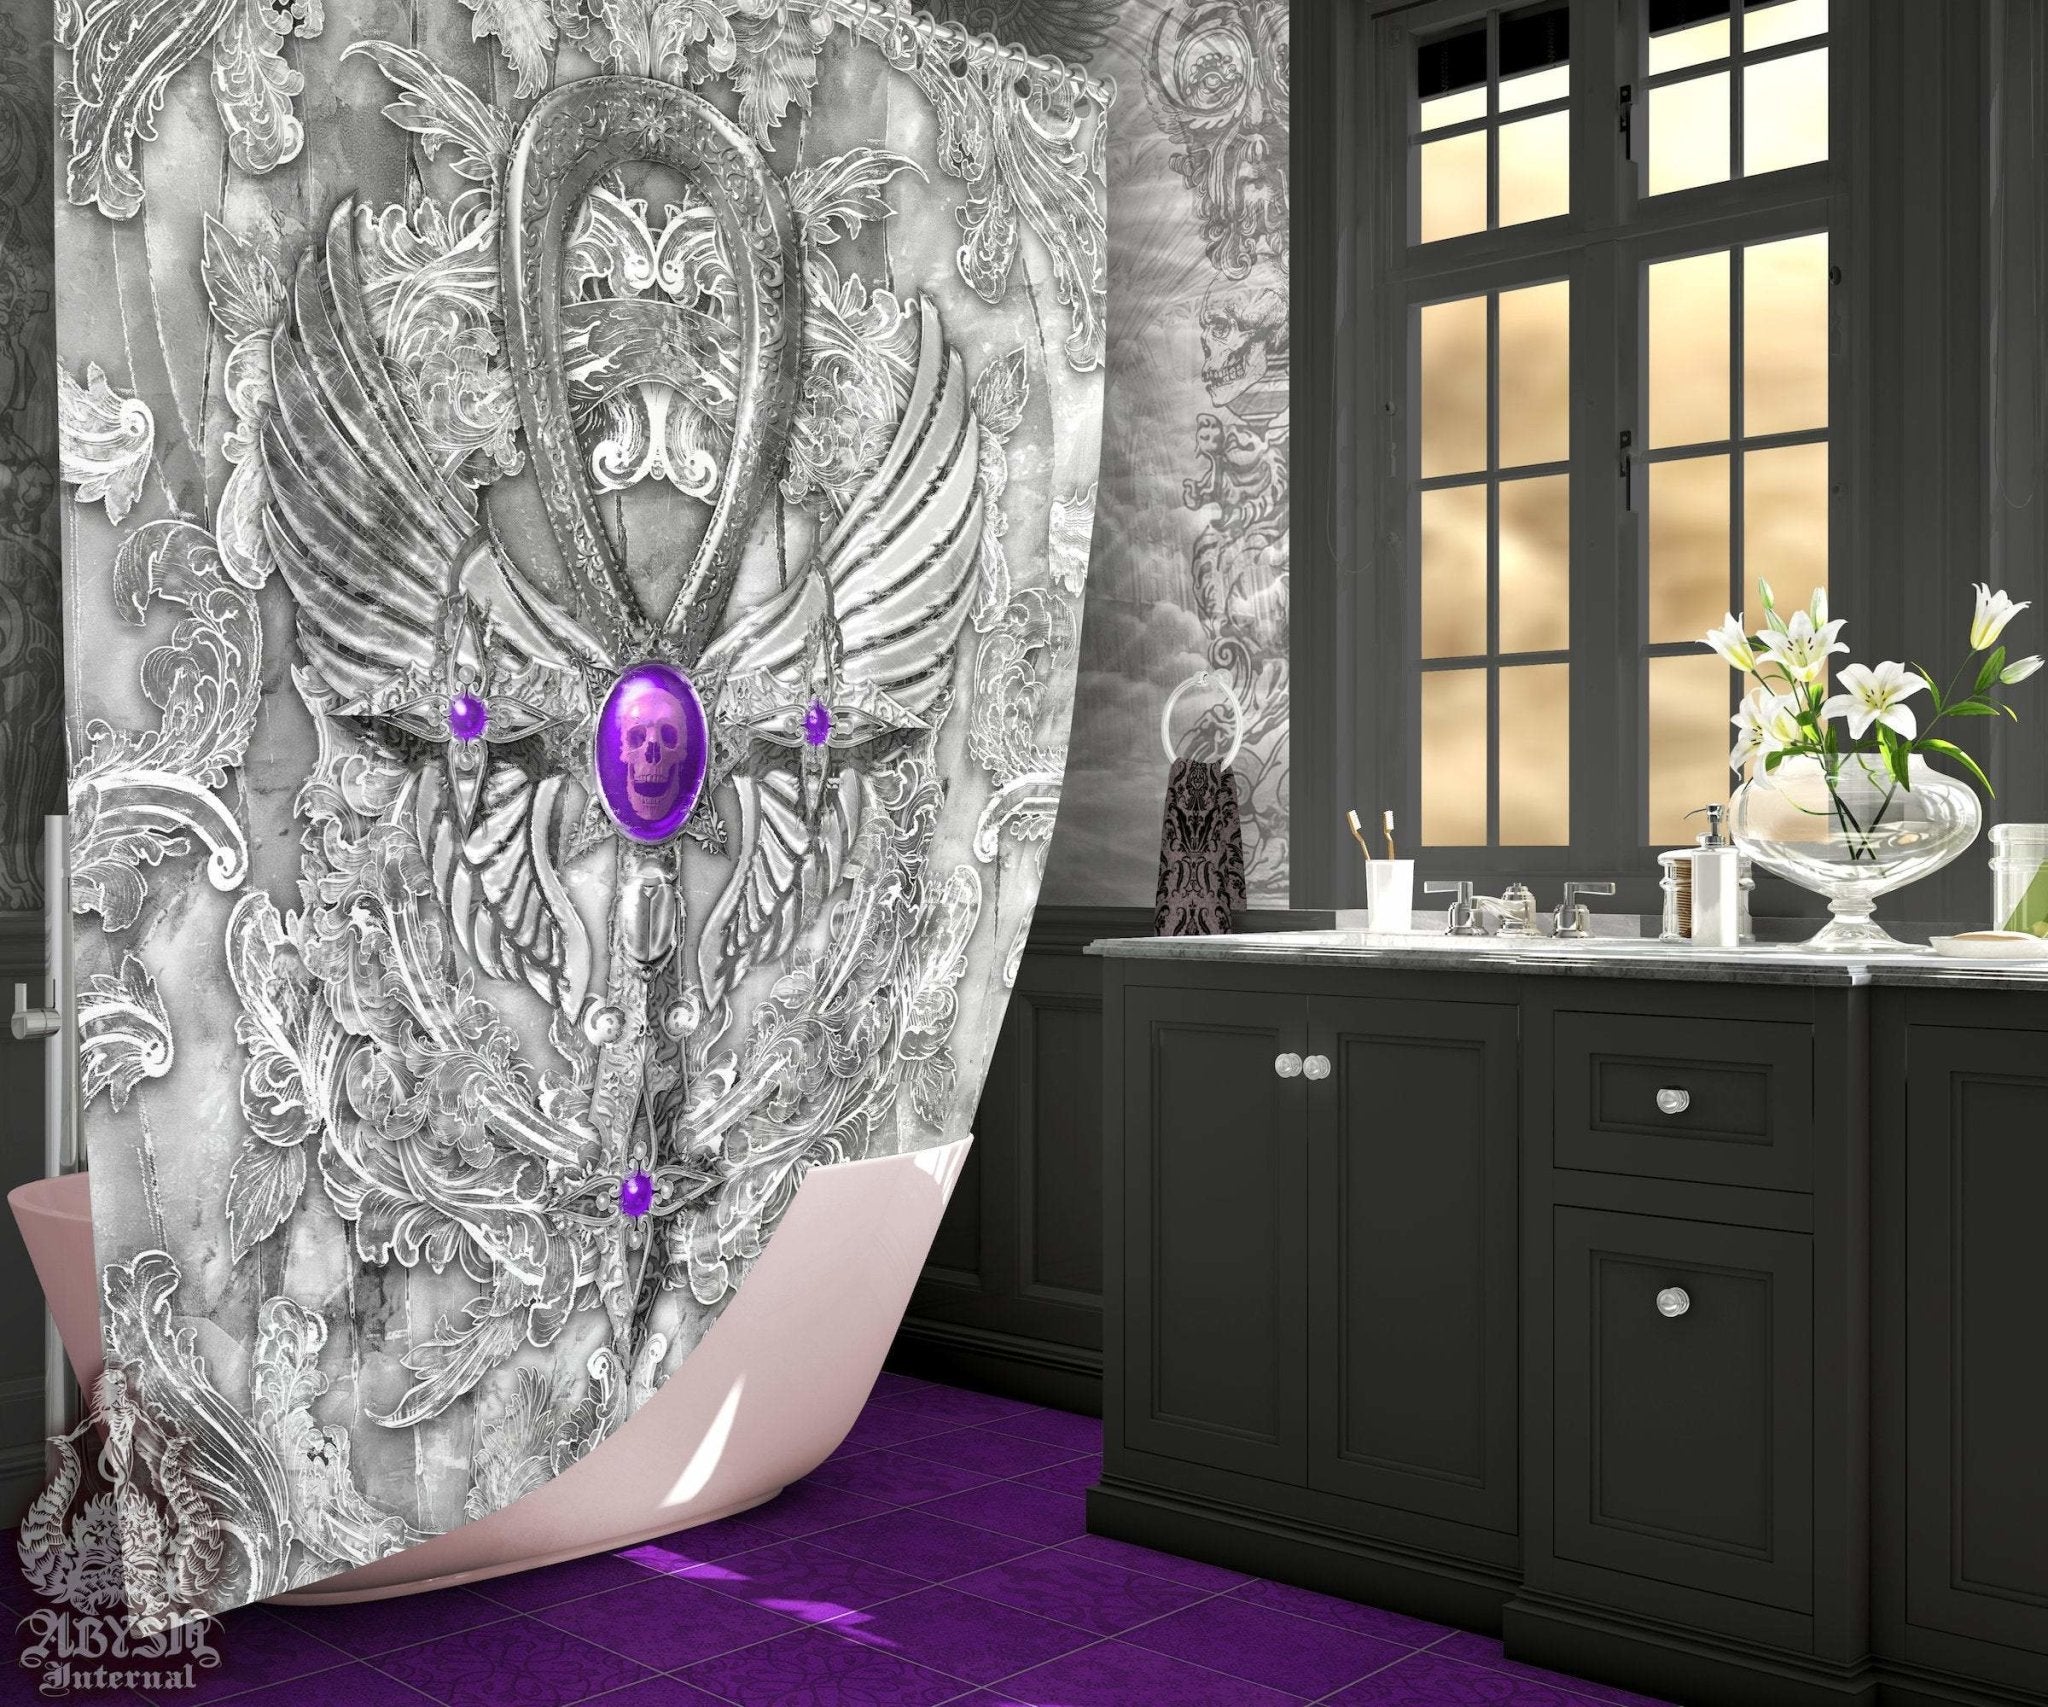 White Goth Shower Curtain, Ankh Cross, Gothic Bathroom Decor, Occult - Stone - Abysm Internal